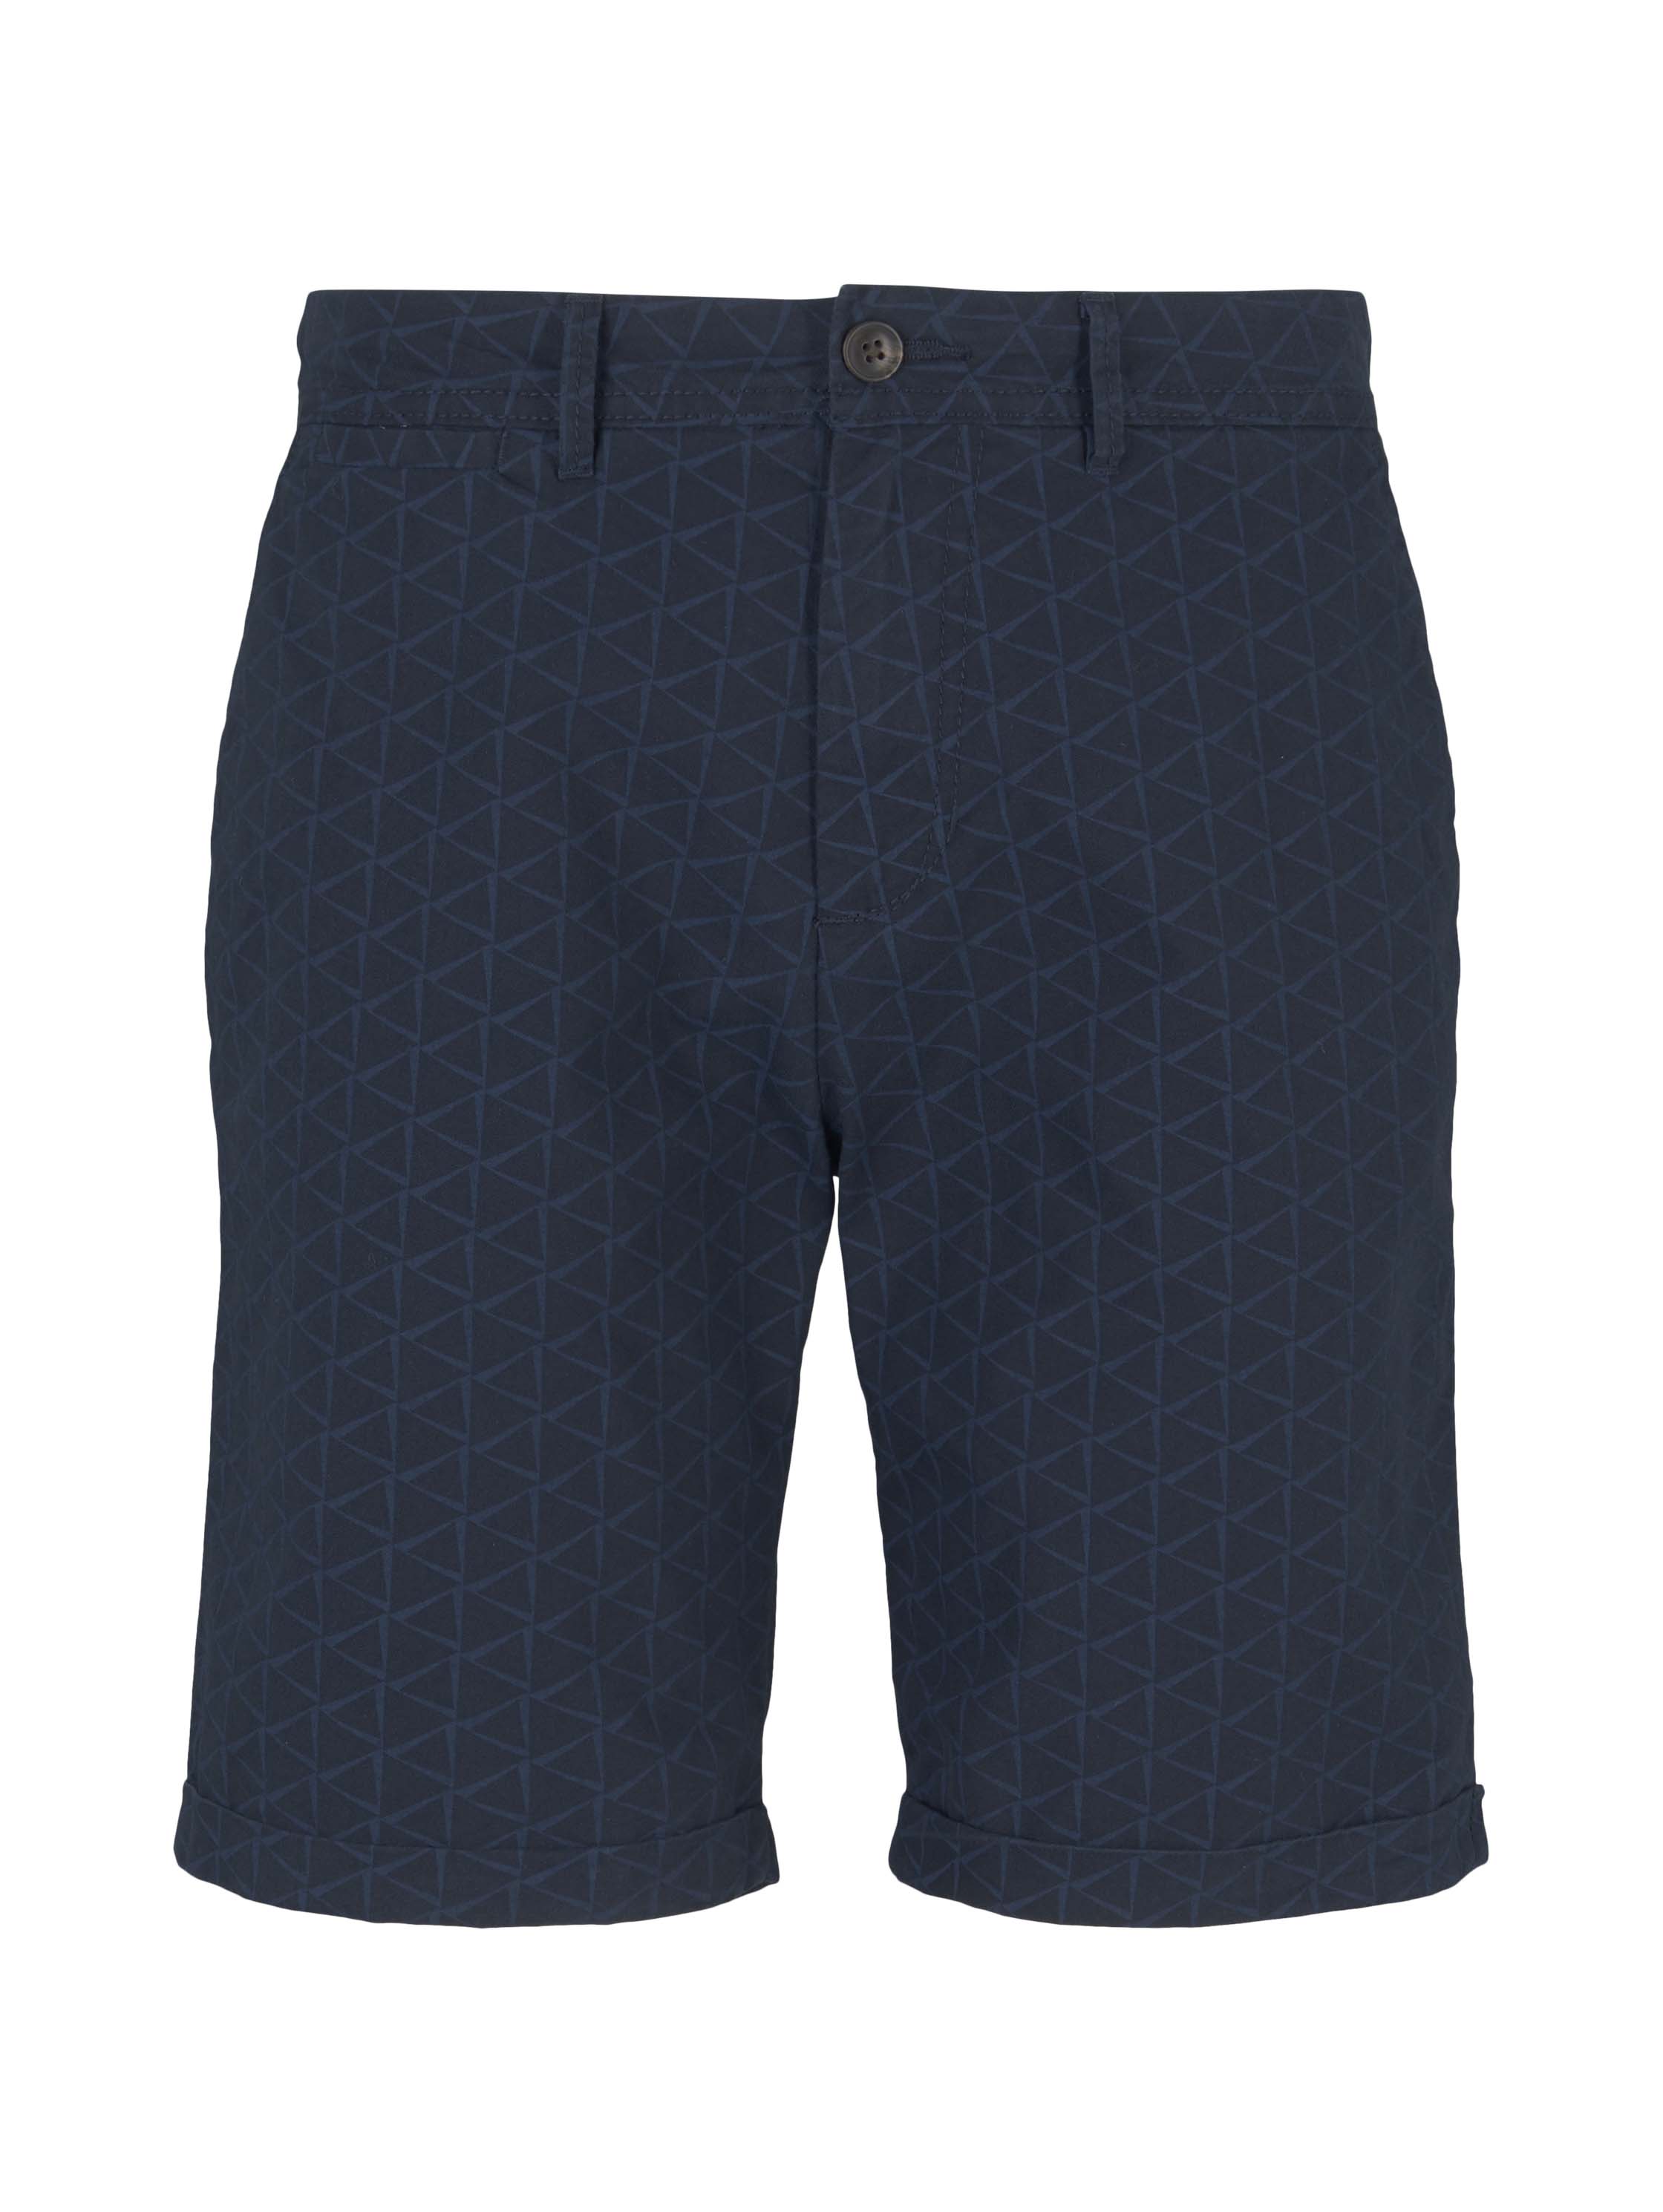 aop shorts, navy big triangle print